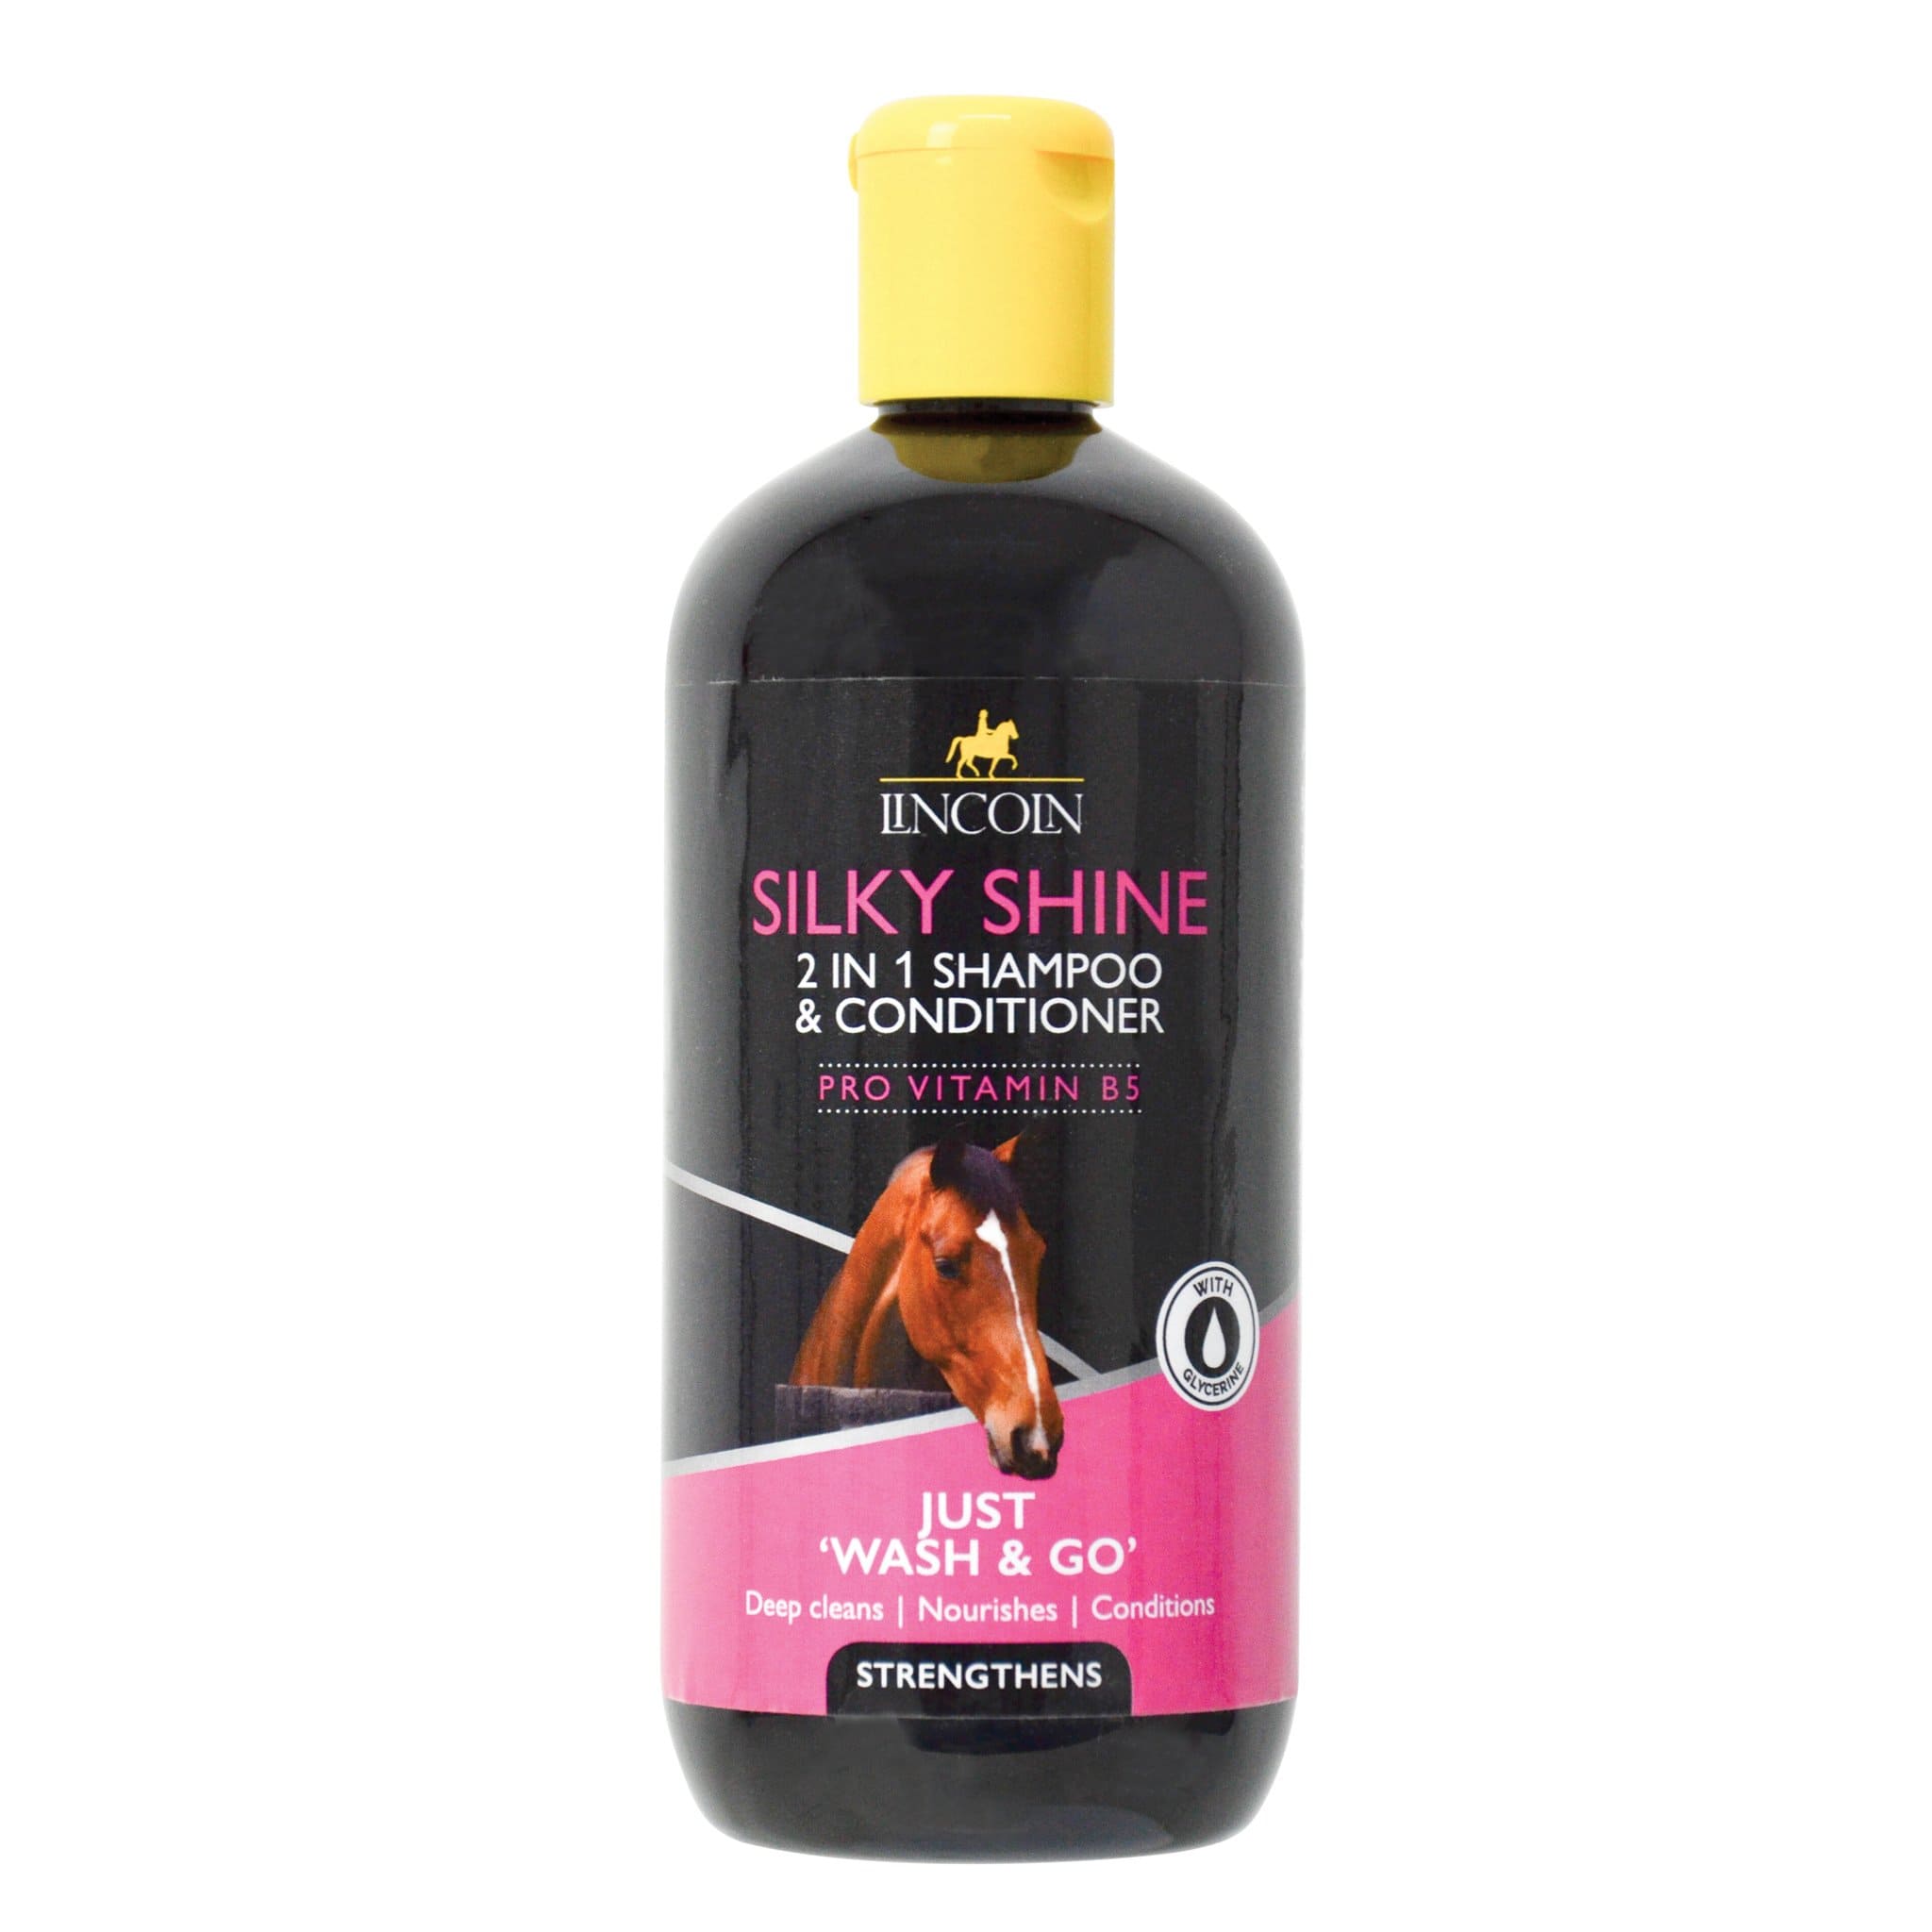 Lincoln Silky Shine 2 in 1 Shampoo and Conditioner 3676